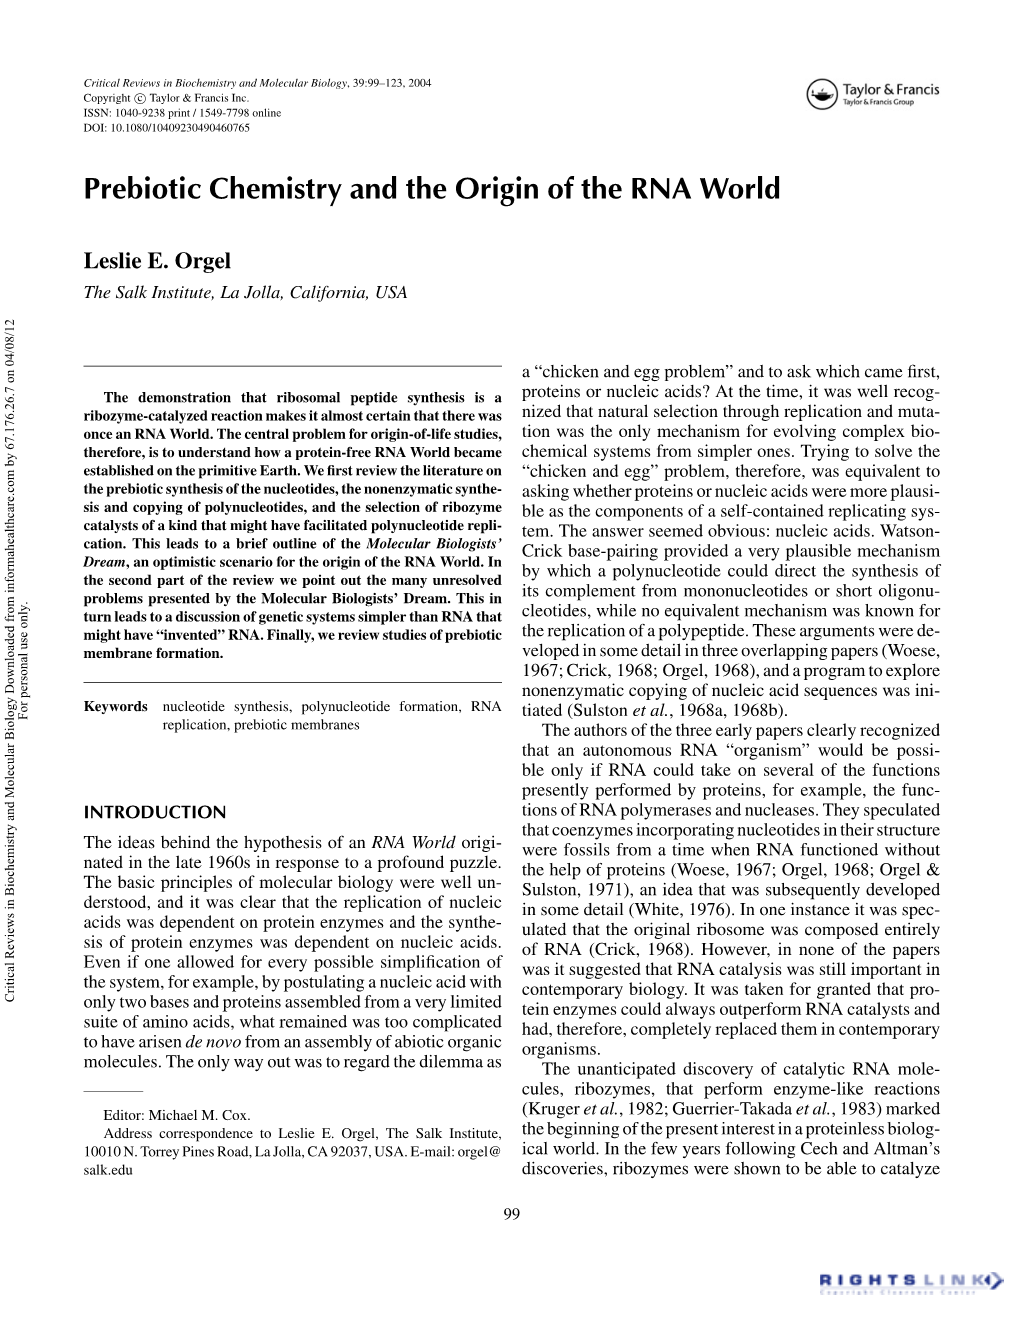 Prebiotic Chemistry and the Origin of the RNA World